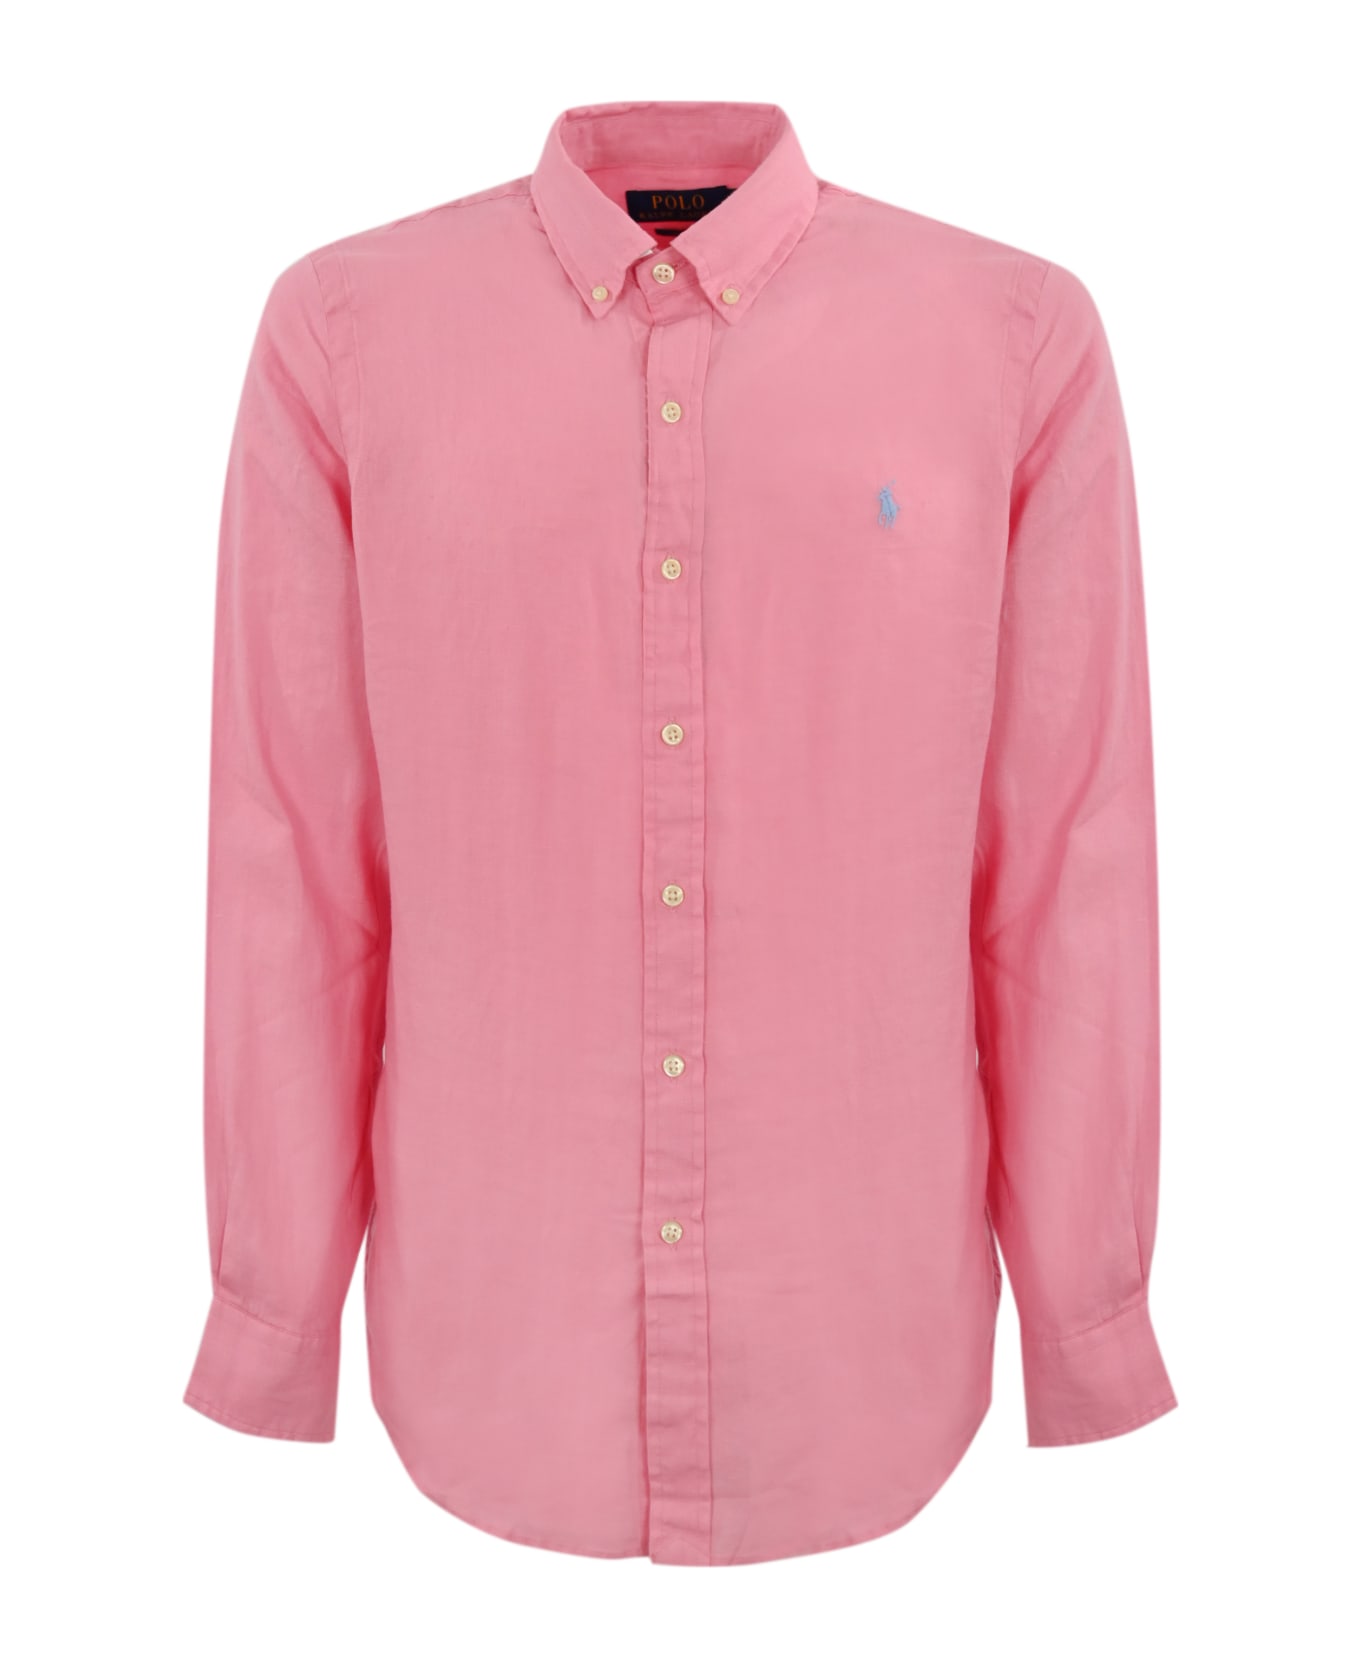 Ralph Lauren Linen Shirt With Pony Logo - Pink